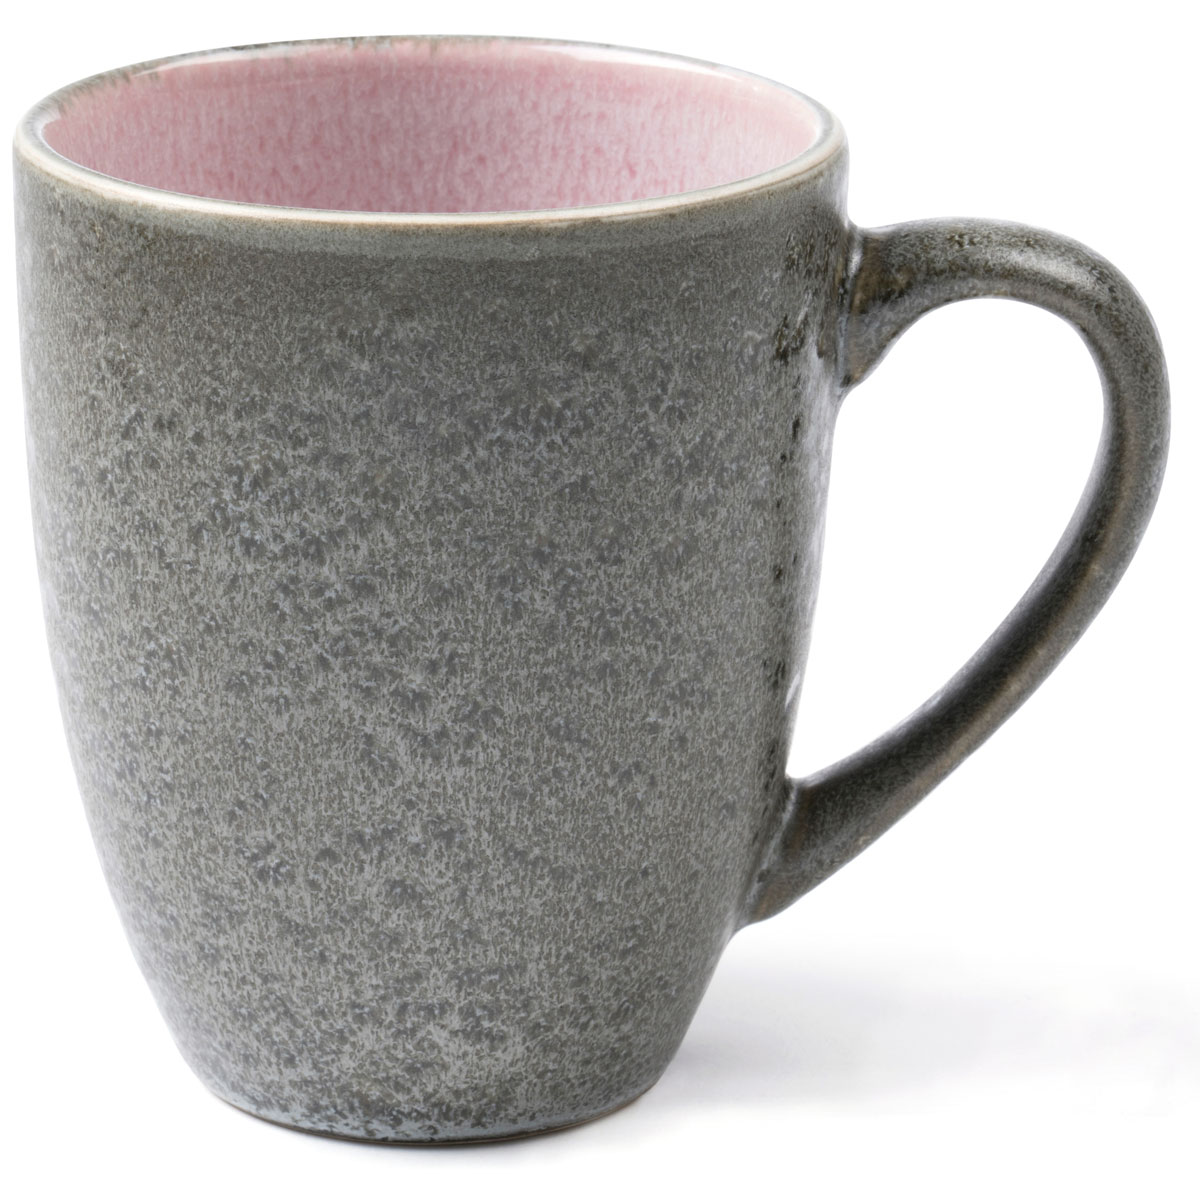 Bitz Mug 30 cl, Grey/Pink